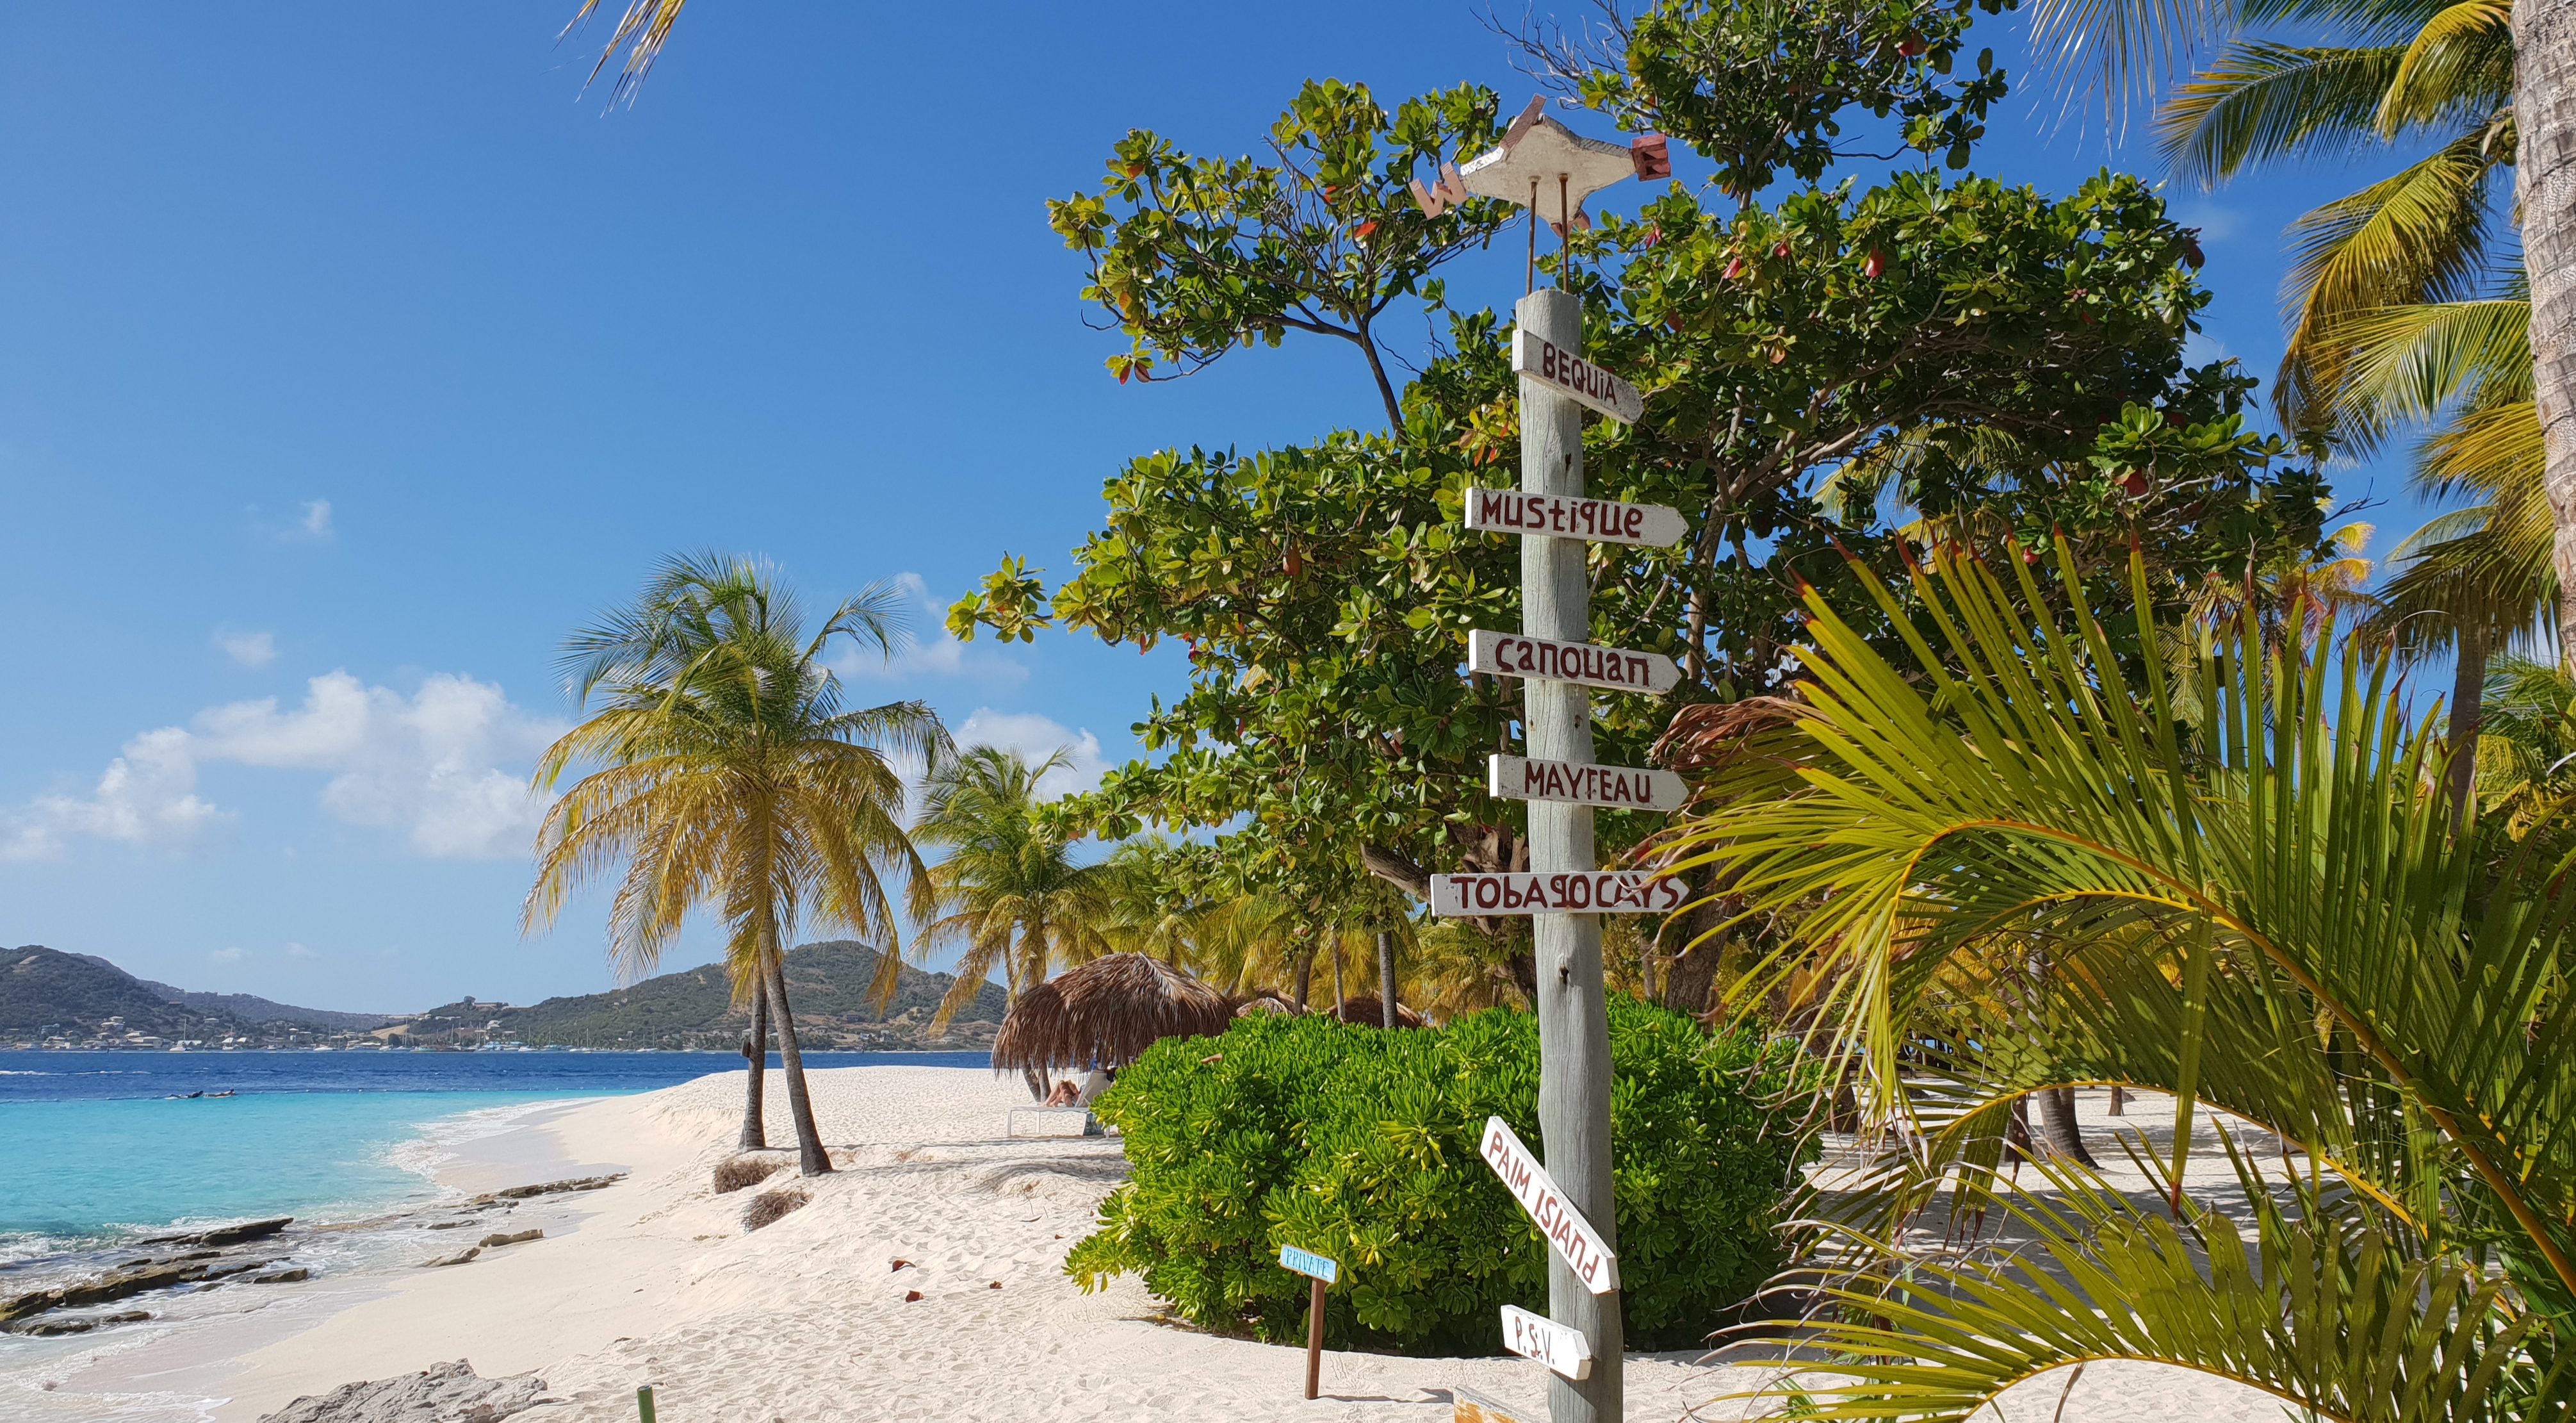 Palm Island sign post, beach